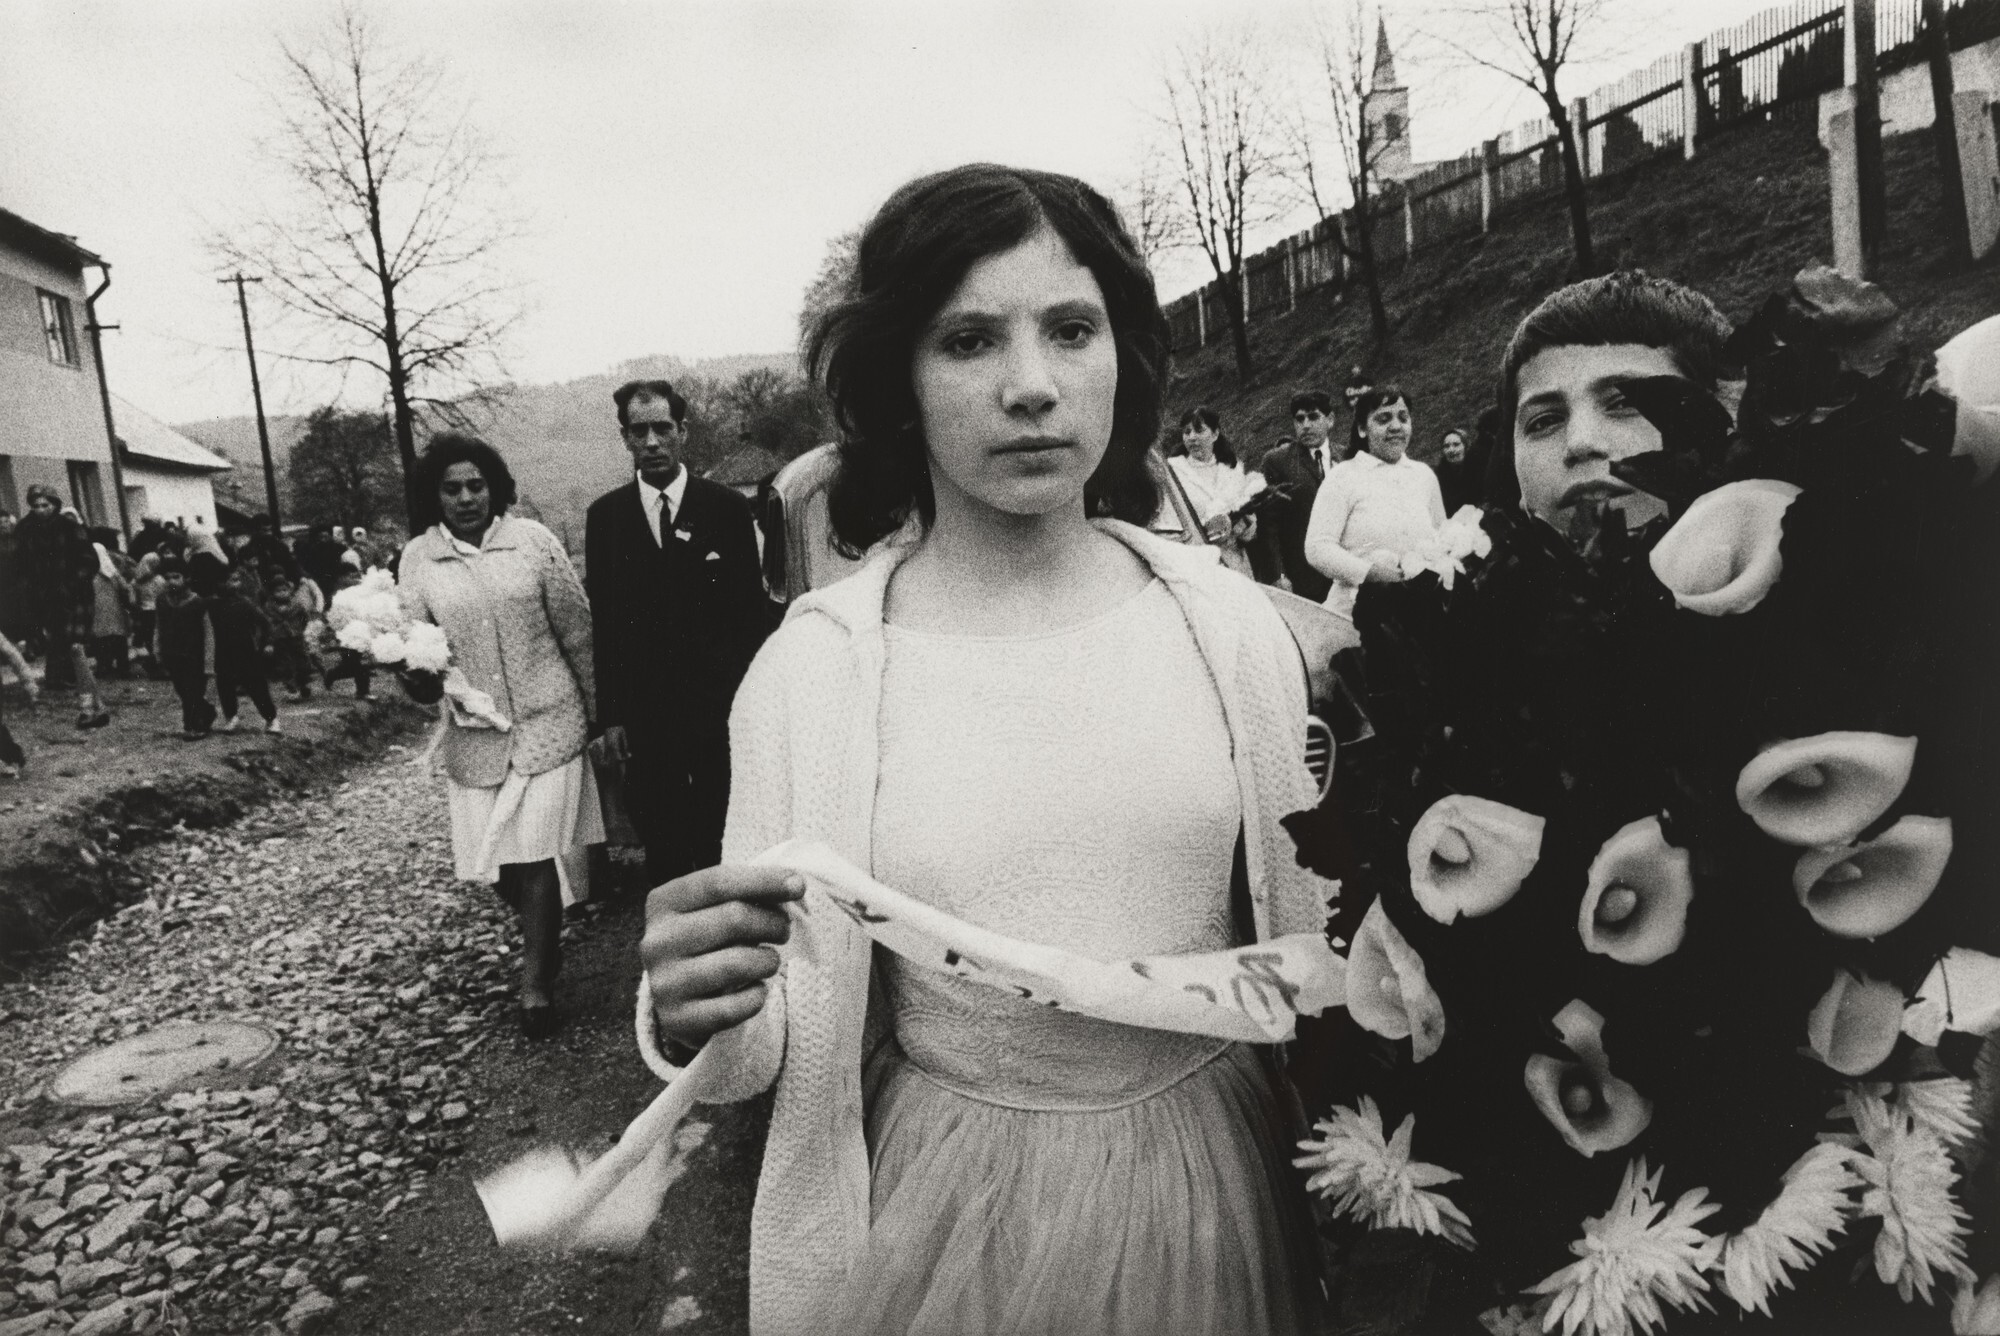 Шествие, 1960-е. Фотограф Йозеф Куделка